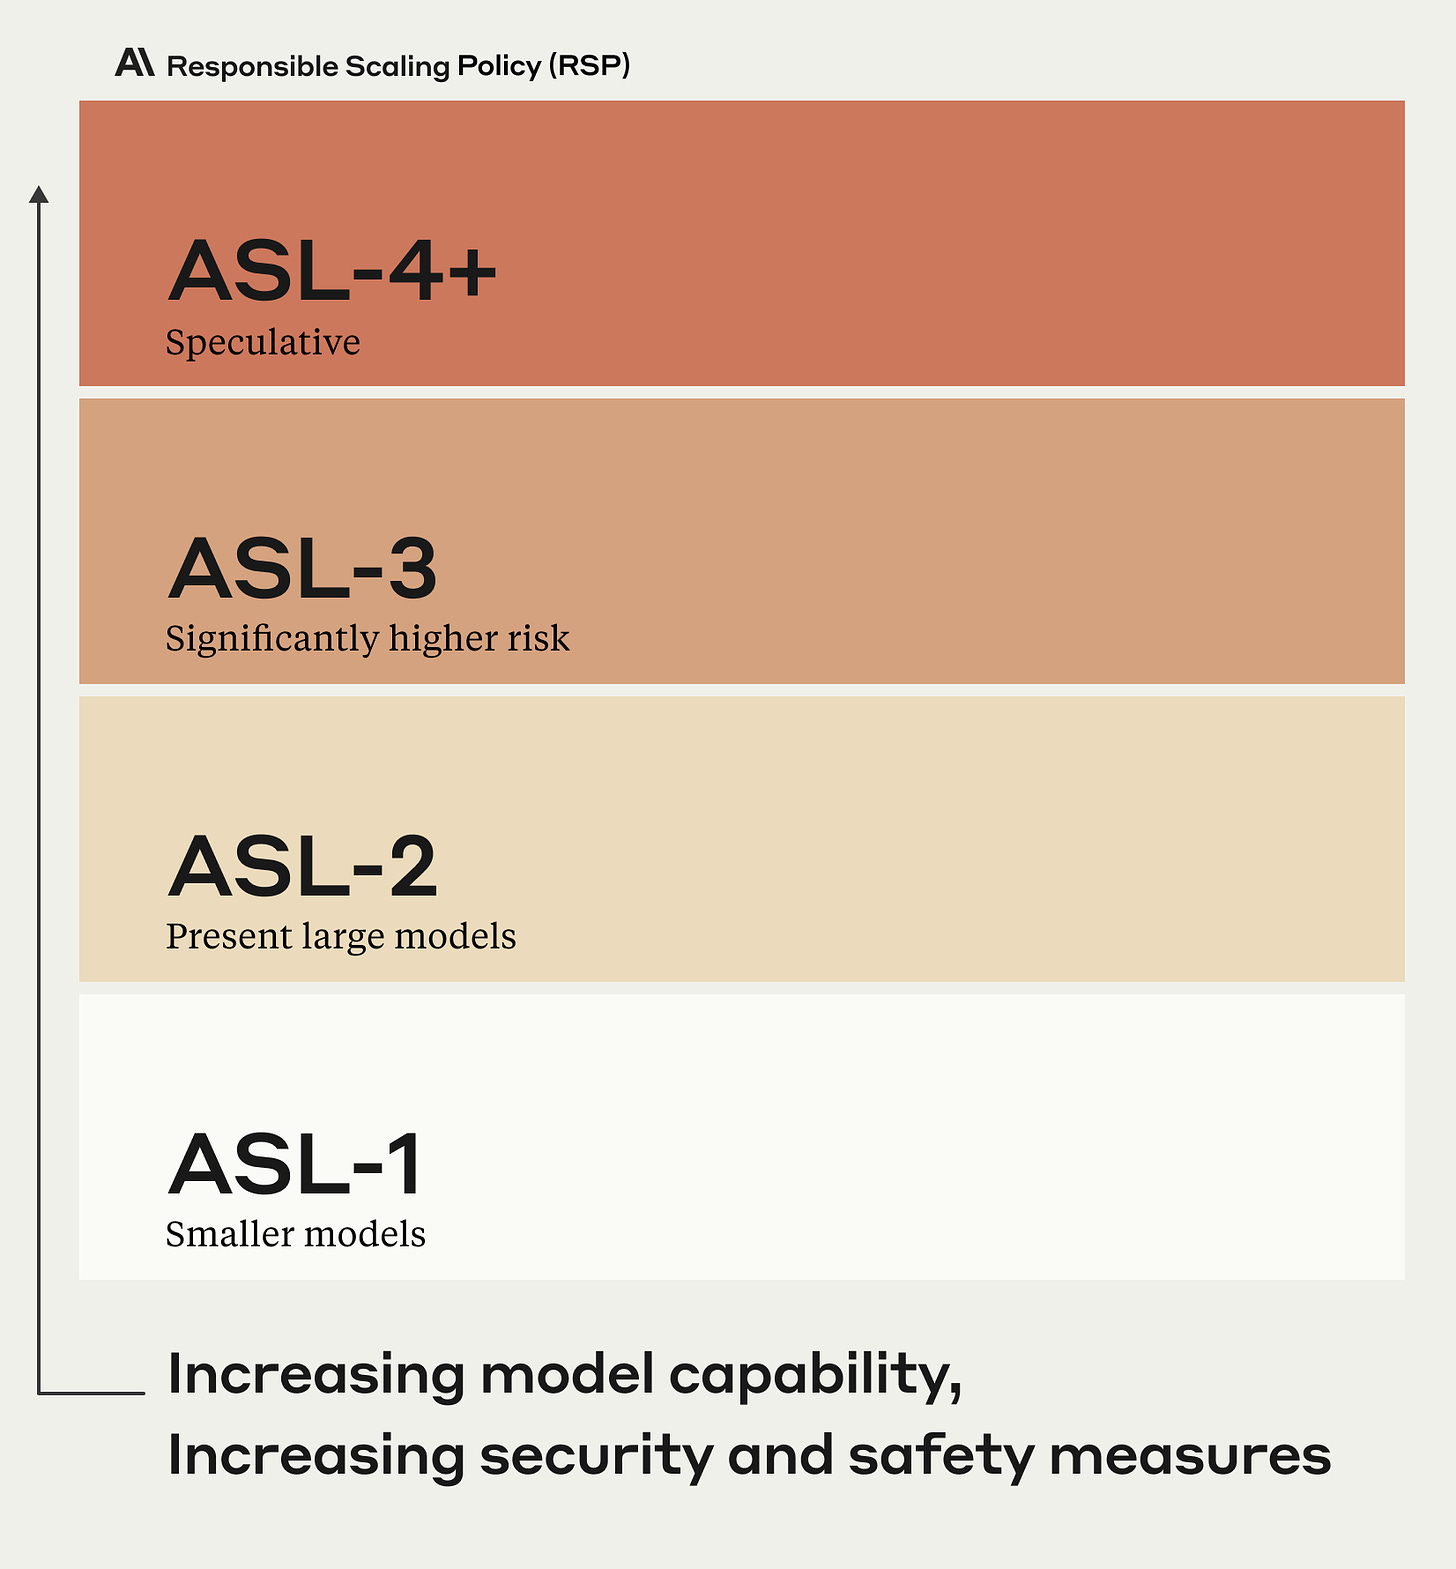 ASL-1: Smaller models. ASL-2: Present large models. ASL-3: Significantly higher risk. ASL-4+: Speculative. Increasing model capability, Increasing security and safety measures. 
